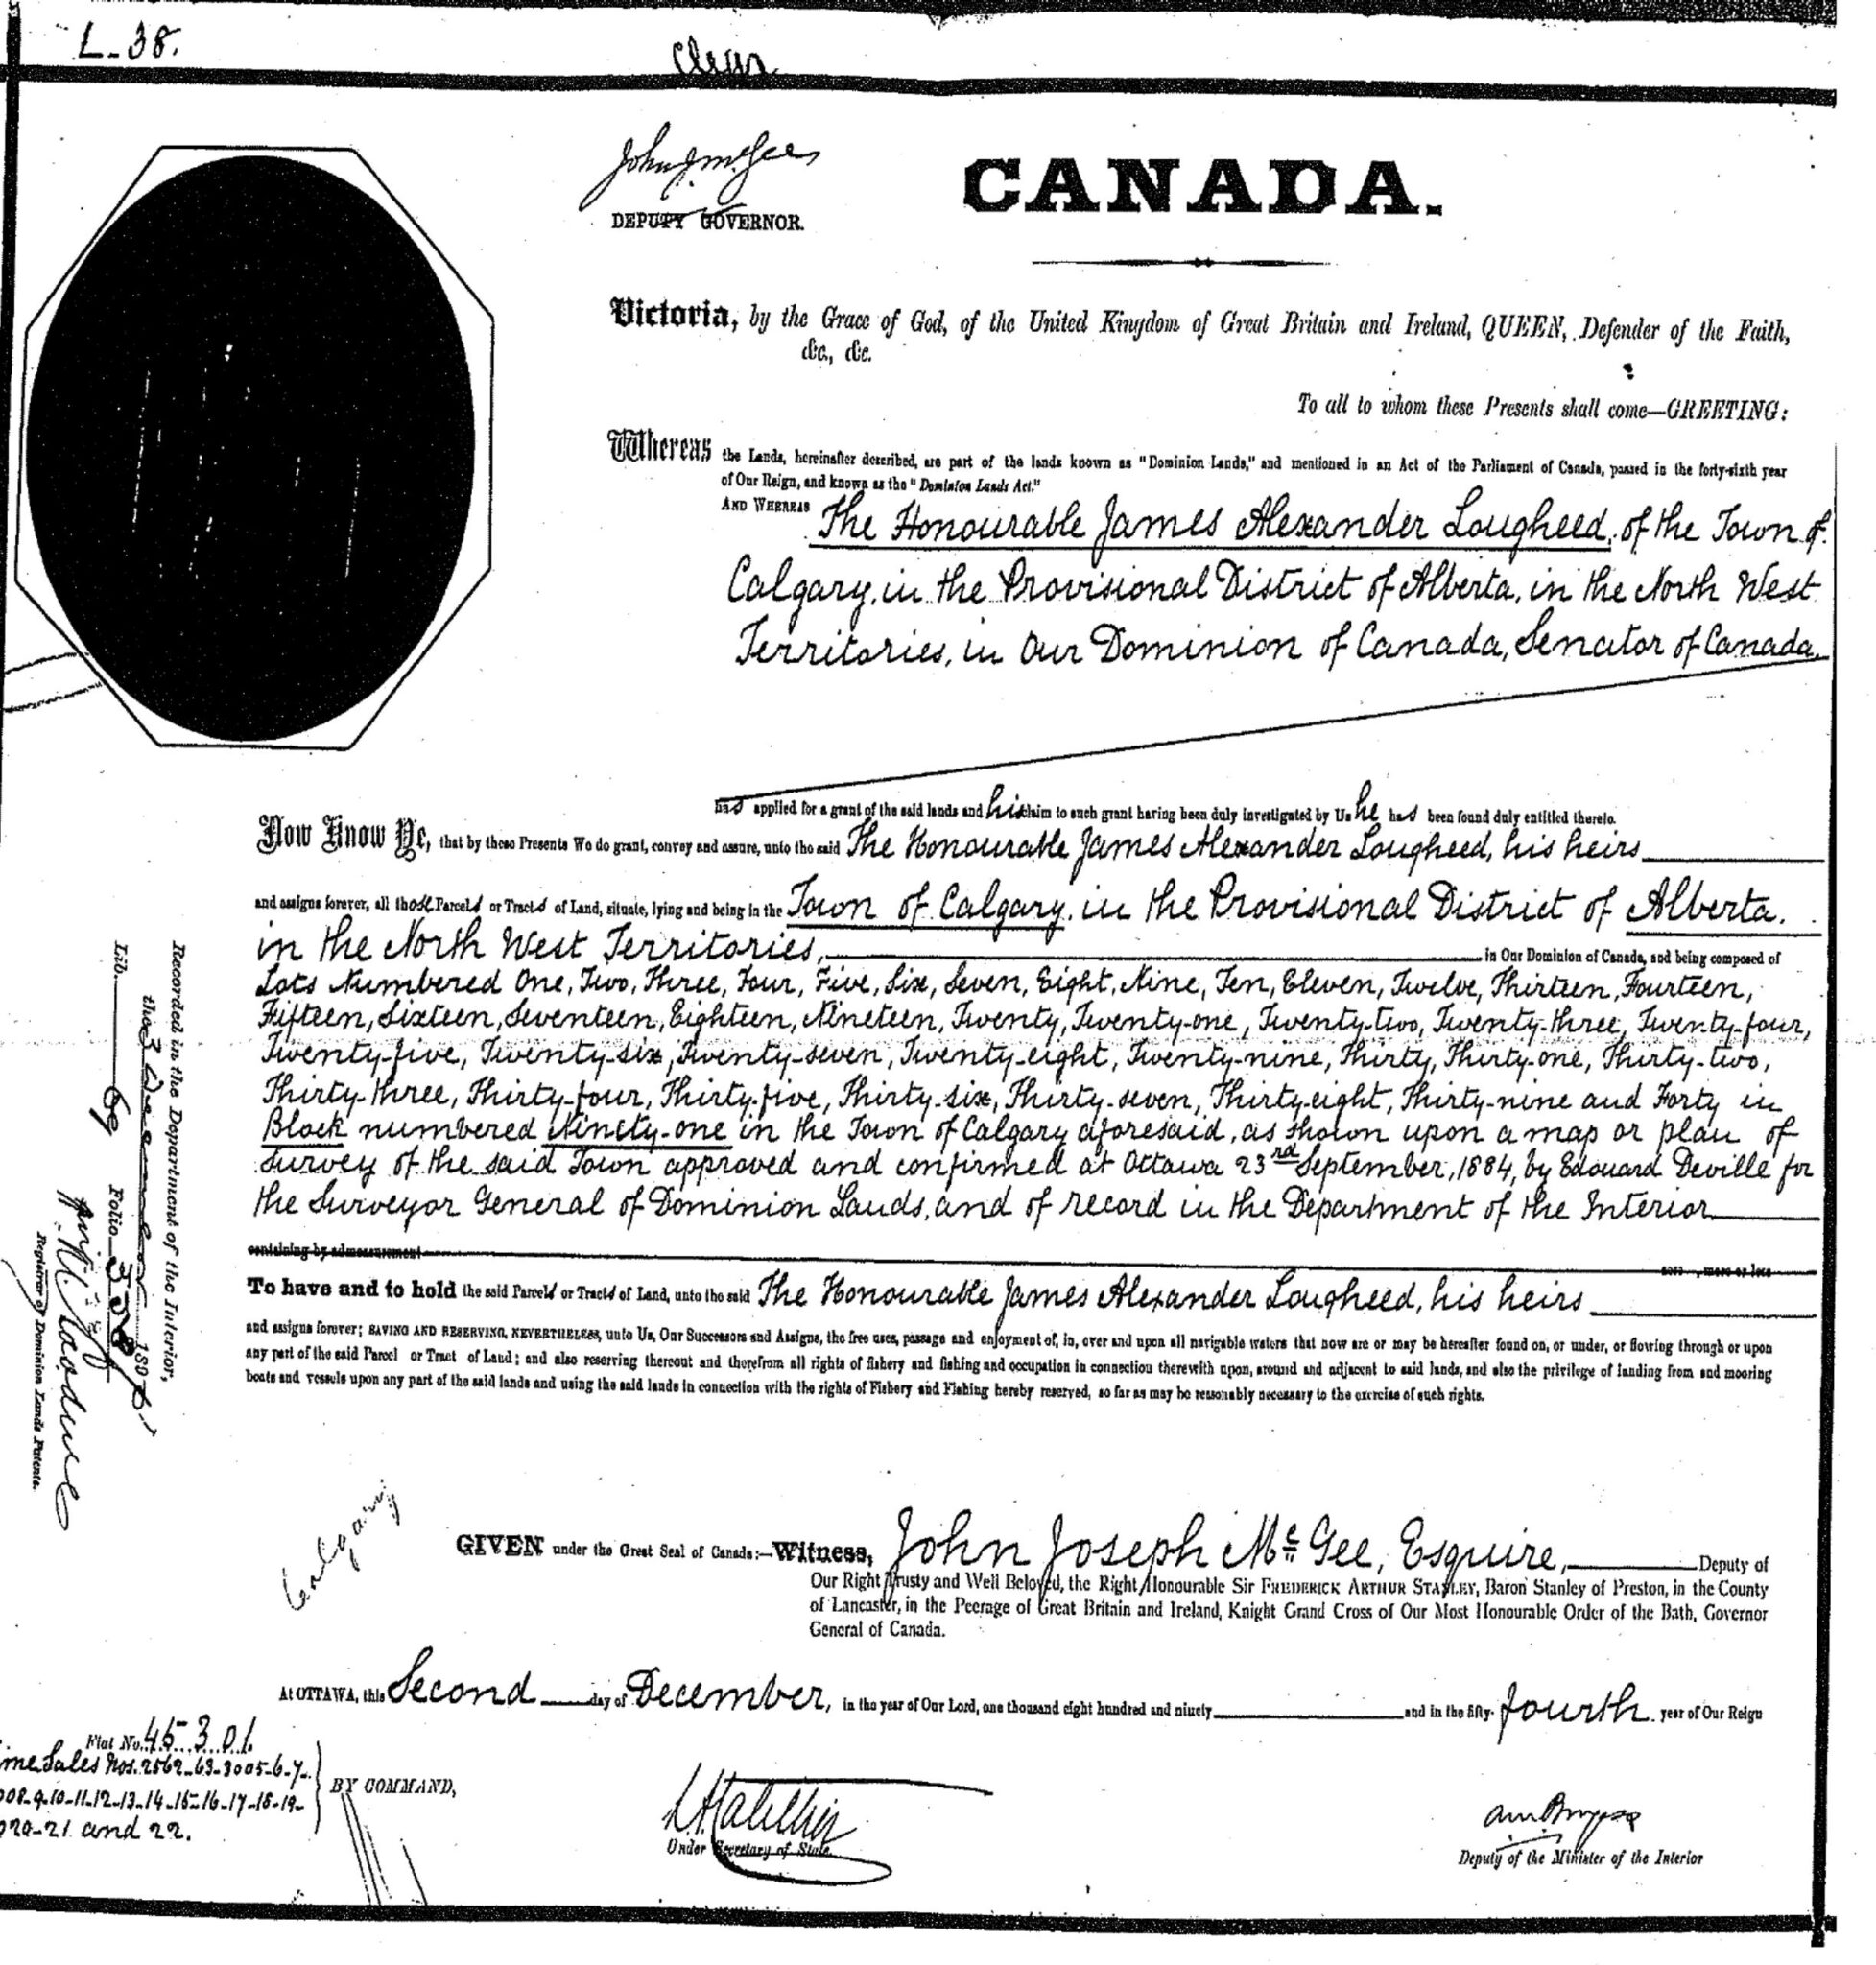 James Lougheed's Dominion Land Grant | December 2, 1891